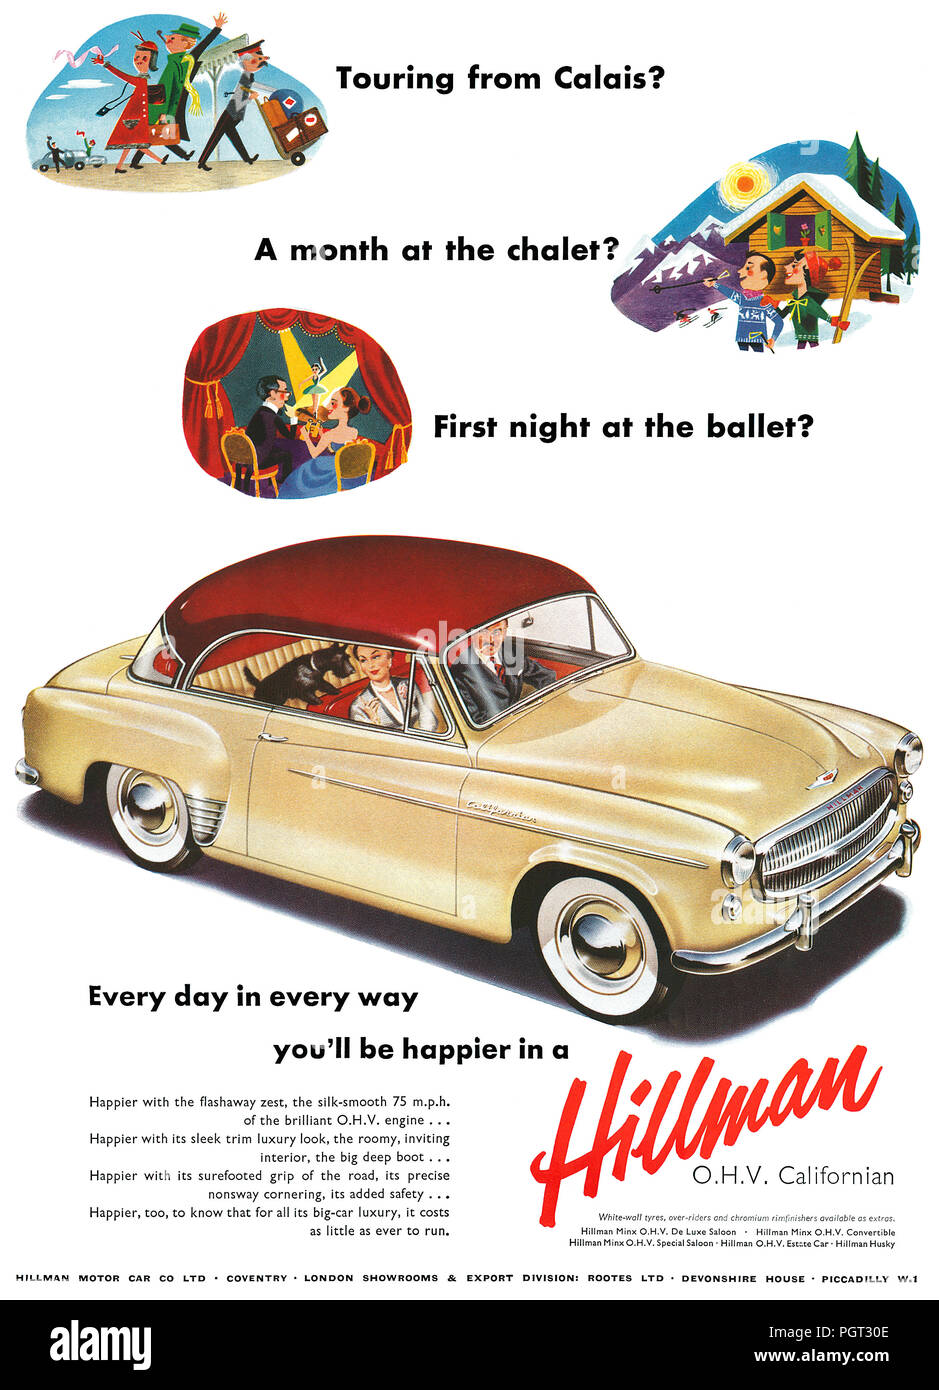 1955 British advertisement for the Hillman O.H.V. Californian motor car. Stock Photo